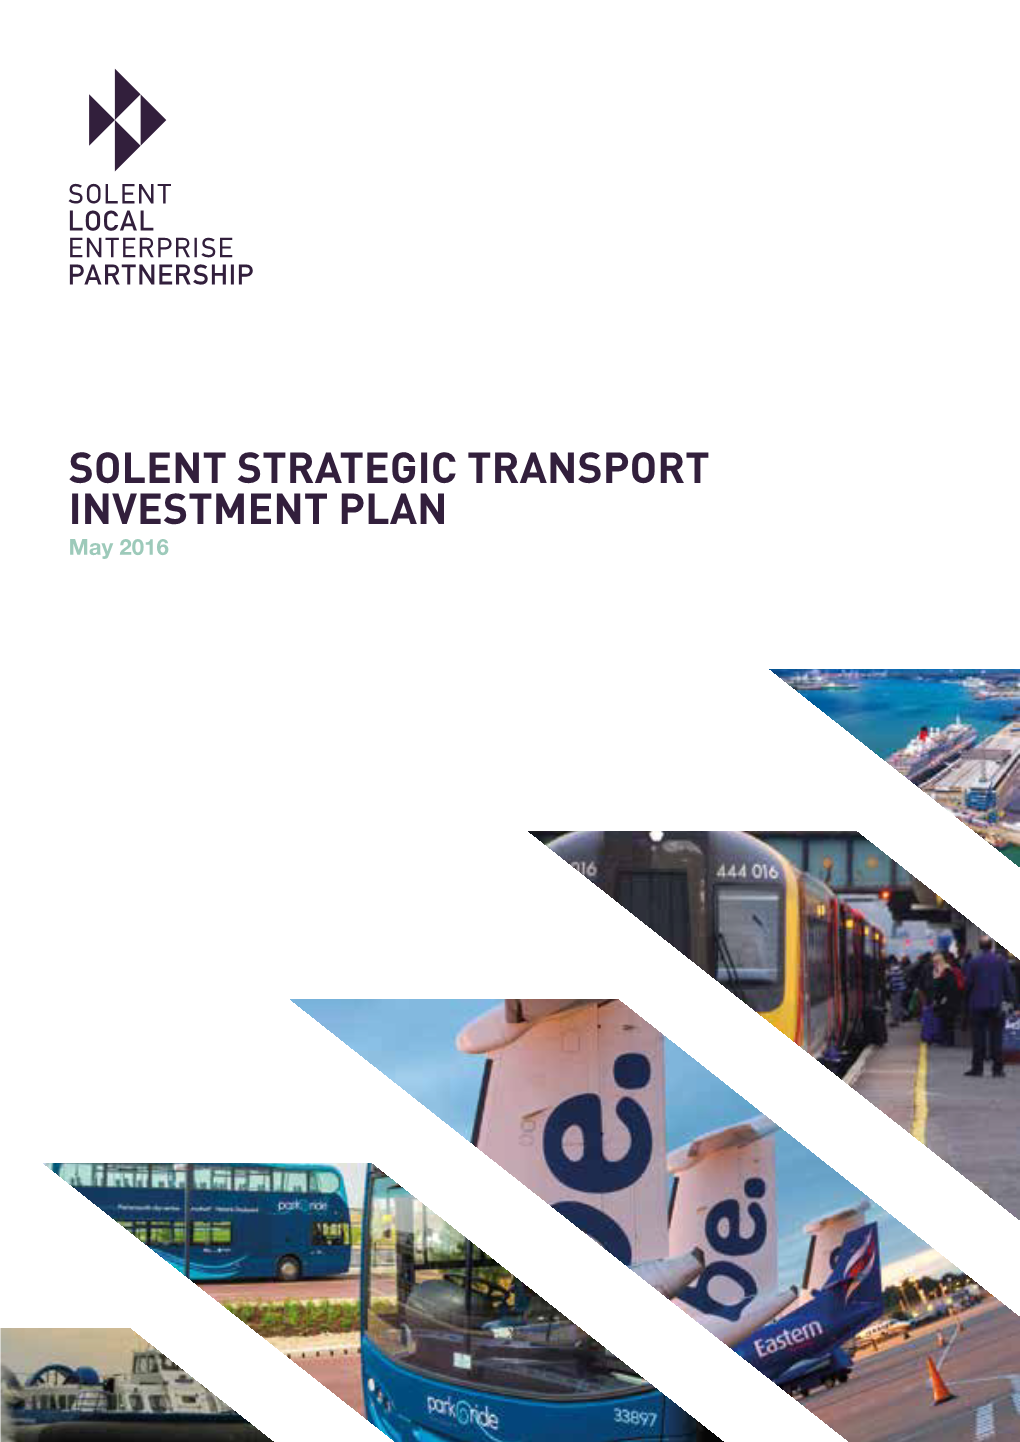 STRATEGIC TRANSPORT INVESTMENT PLAN May 2016 SOLENT STRATEGIC TRANSPORT INVESTMENT PLAN CONTENTS